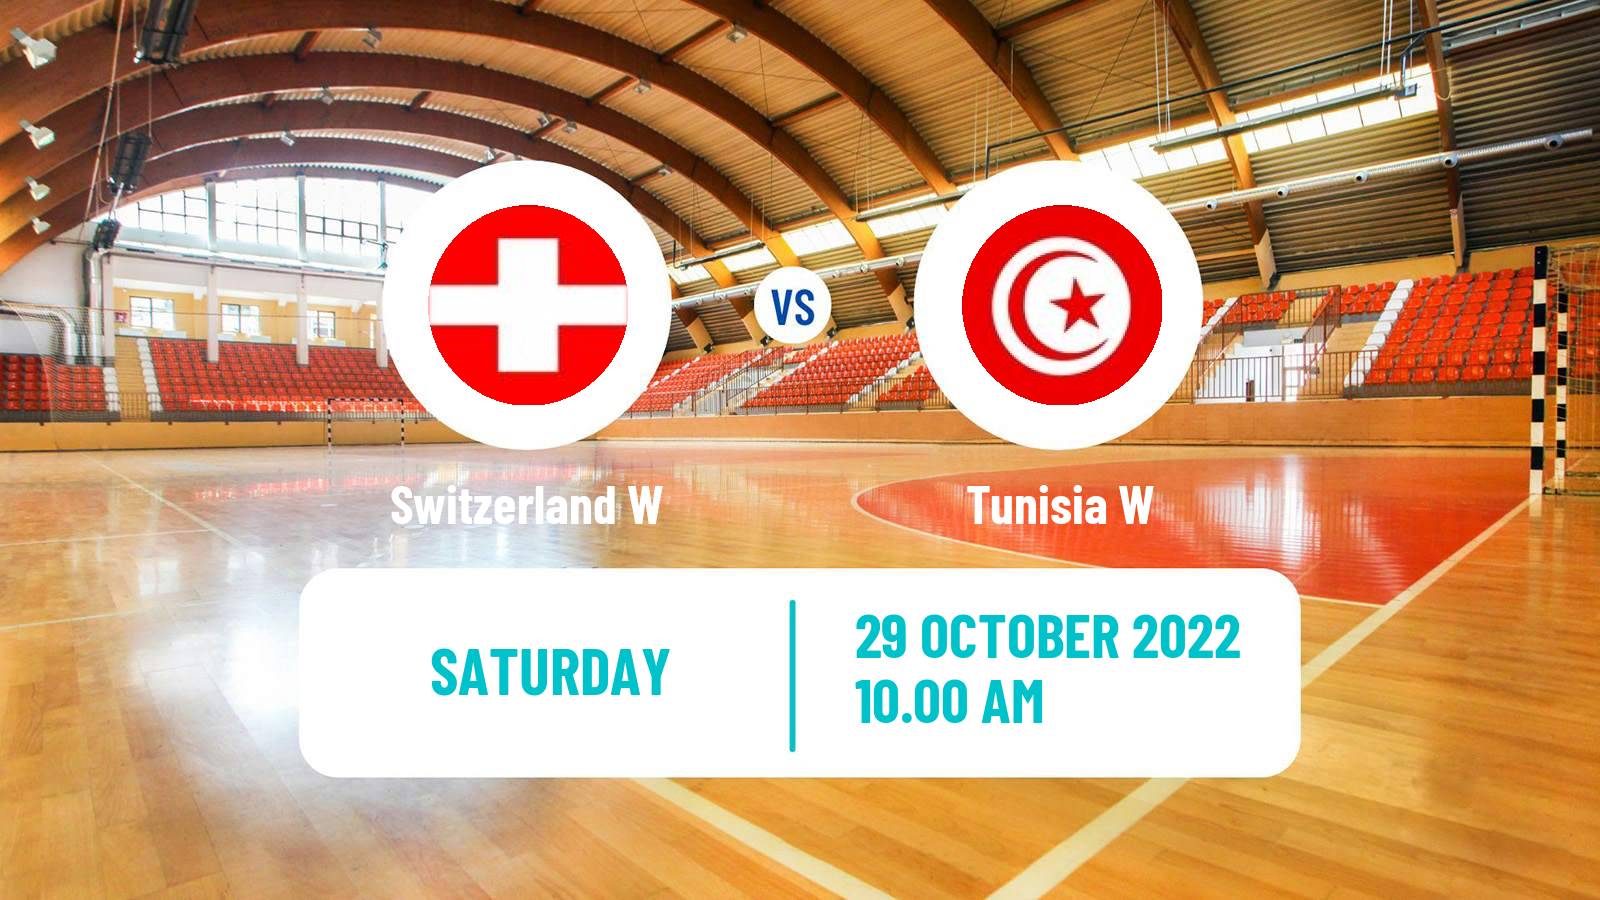 Handball Friendly International Handball Women Switzerland W - Tunisia W